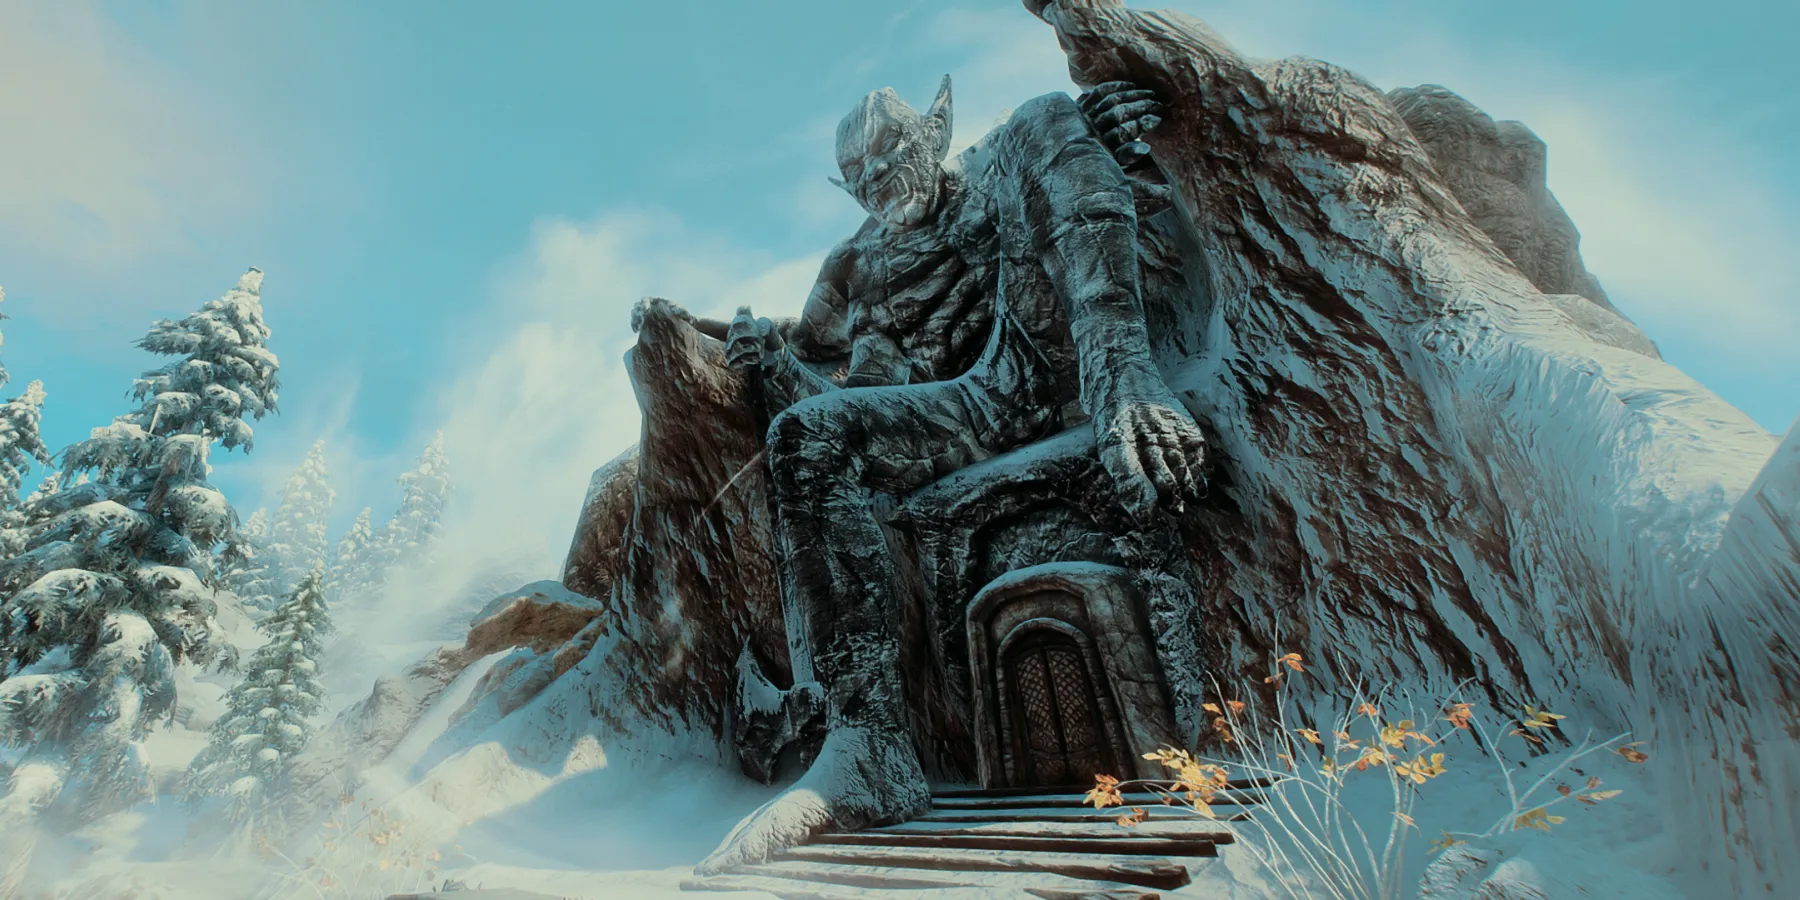 Captura de pantalla de Skyrim que muestra el exterior del santuario de Mehrune's Dagon.